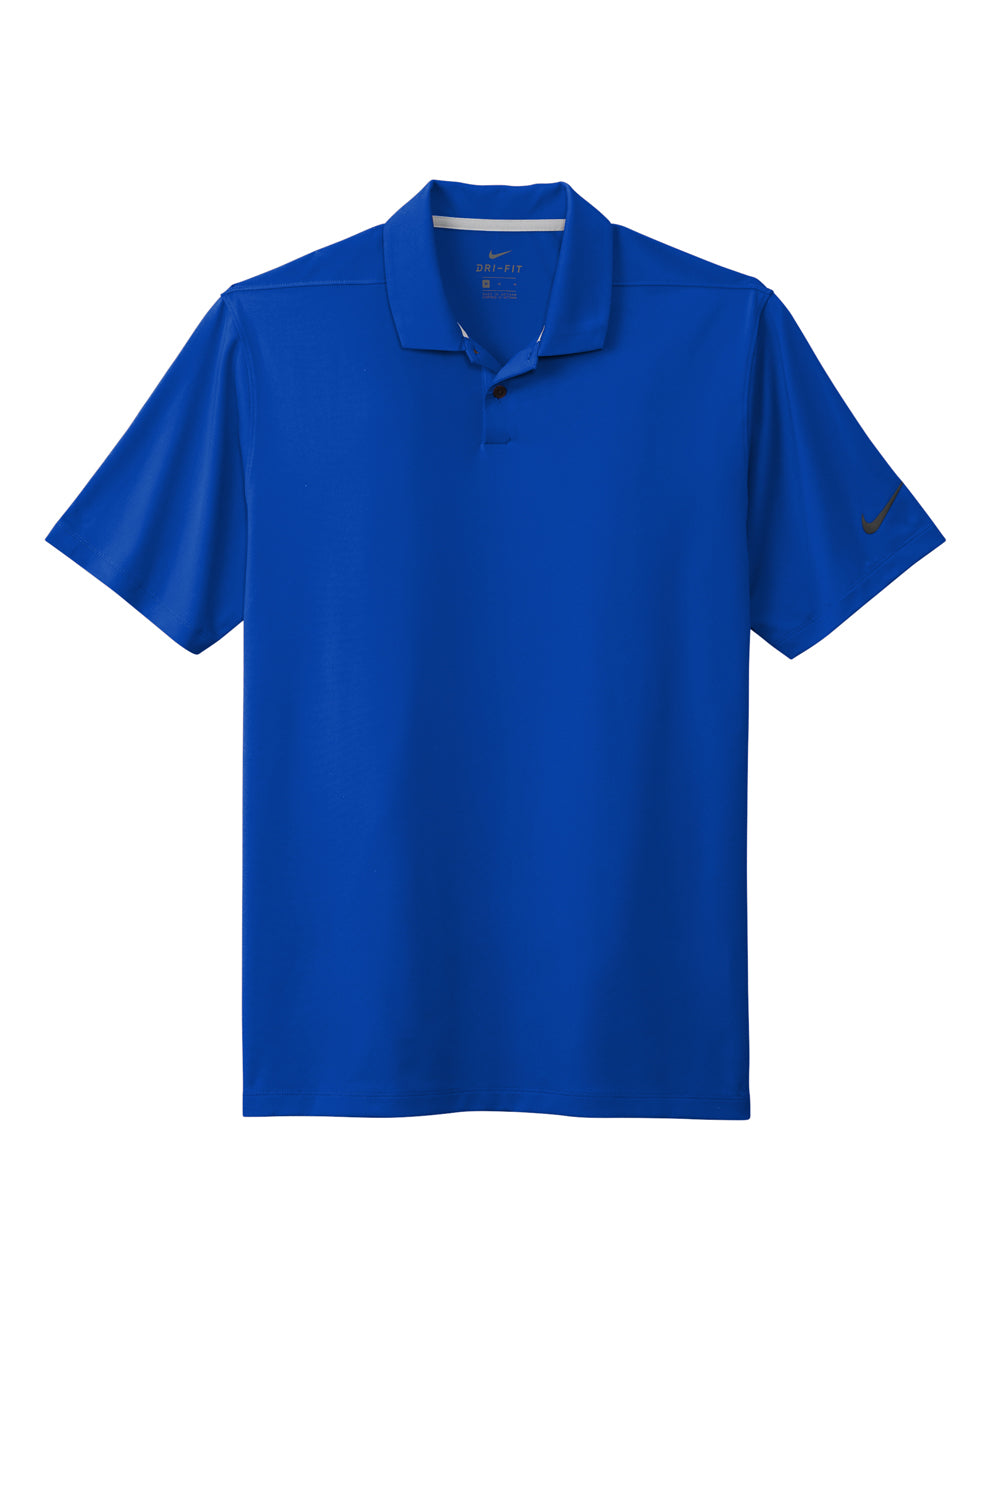 Nike NKDC2108 Mens Vapor Dri-Fit Moisture Wicking Short Sleeve Polo Shirt Game Royal Blue Flat Front